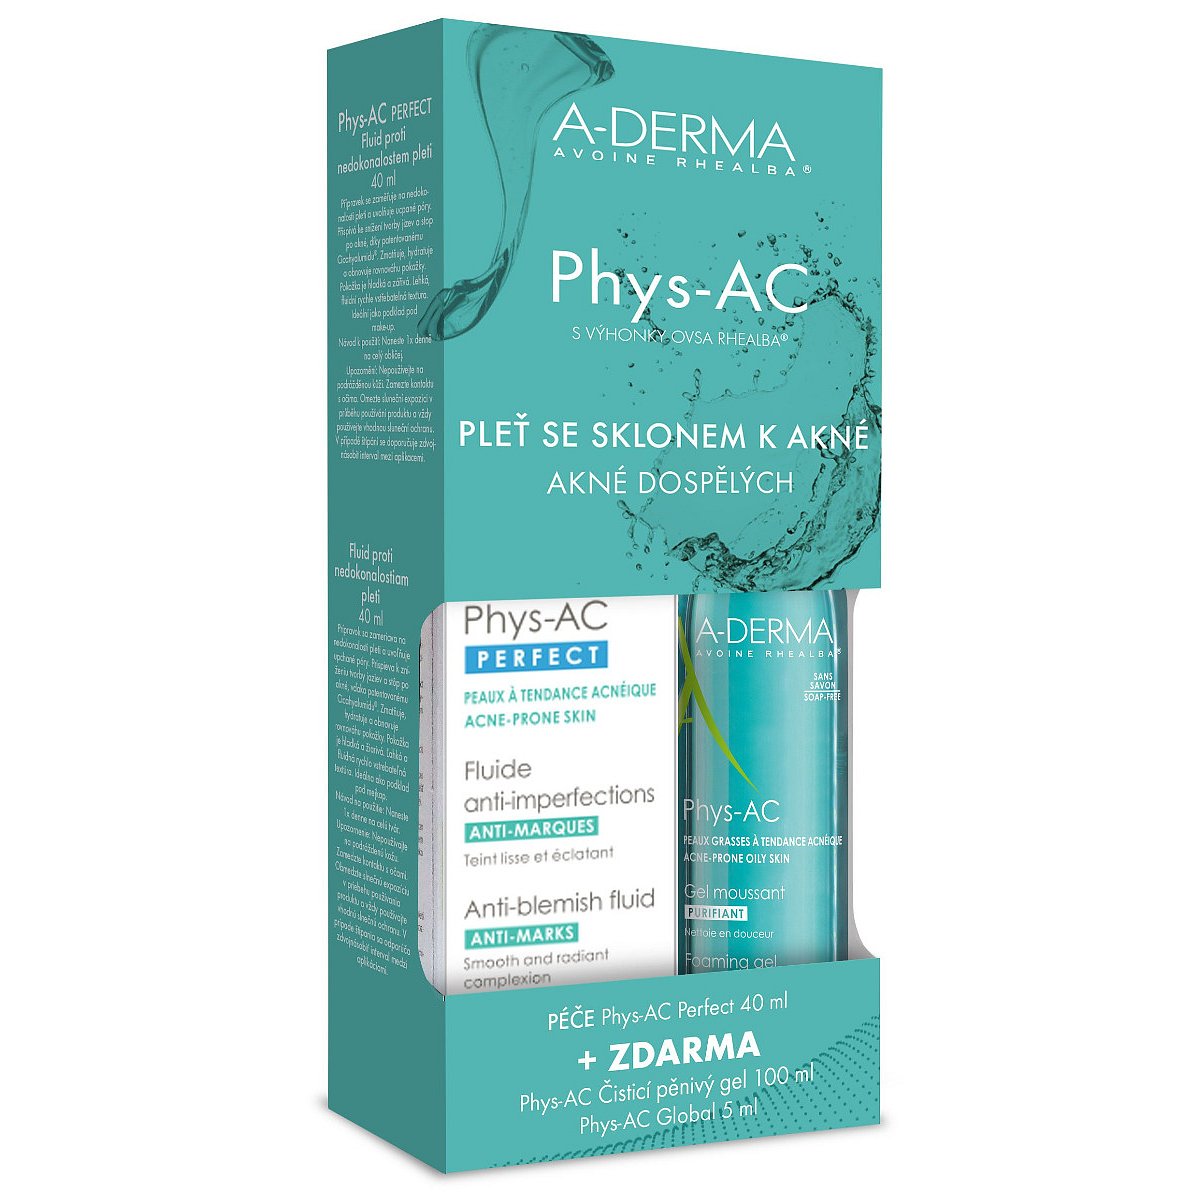 A-Derma Phys-AC Perfect 40 ml + Čisticí gel 100 ml + vzorek gel 5 ml